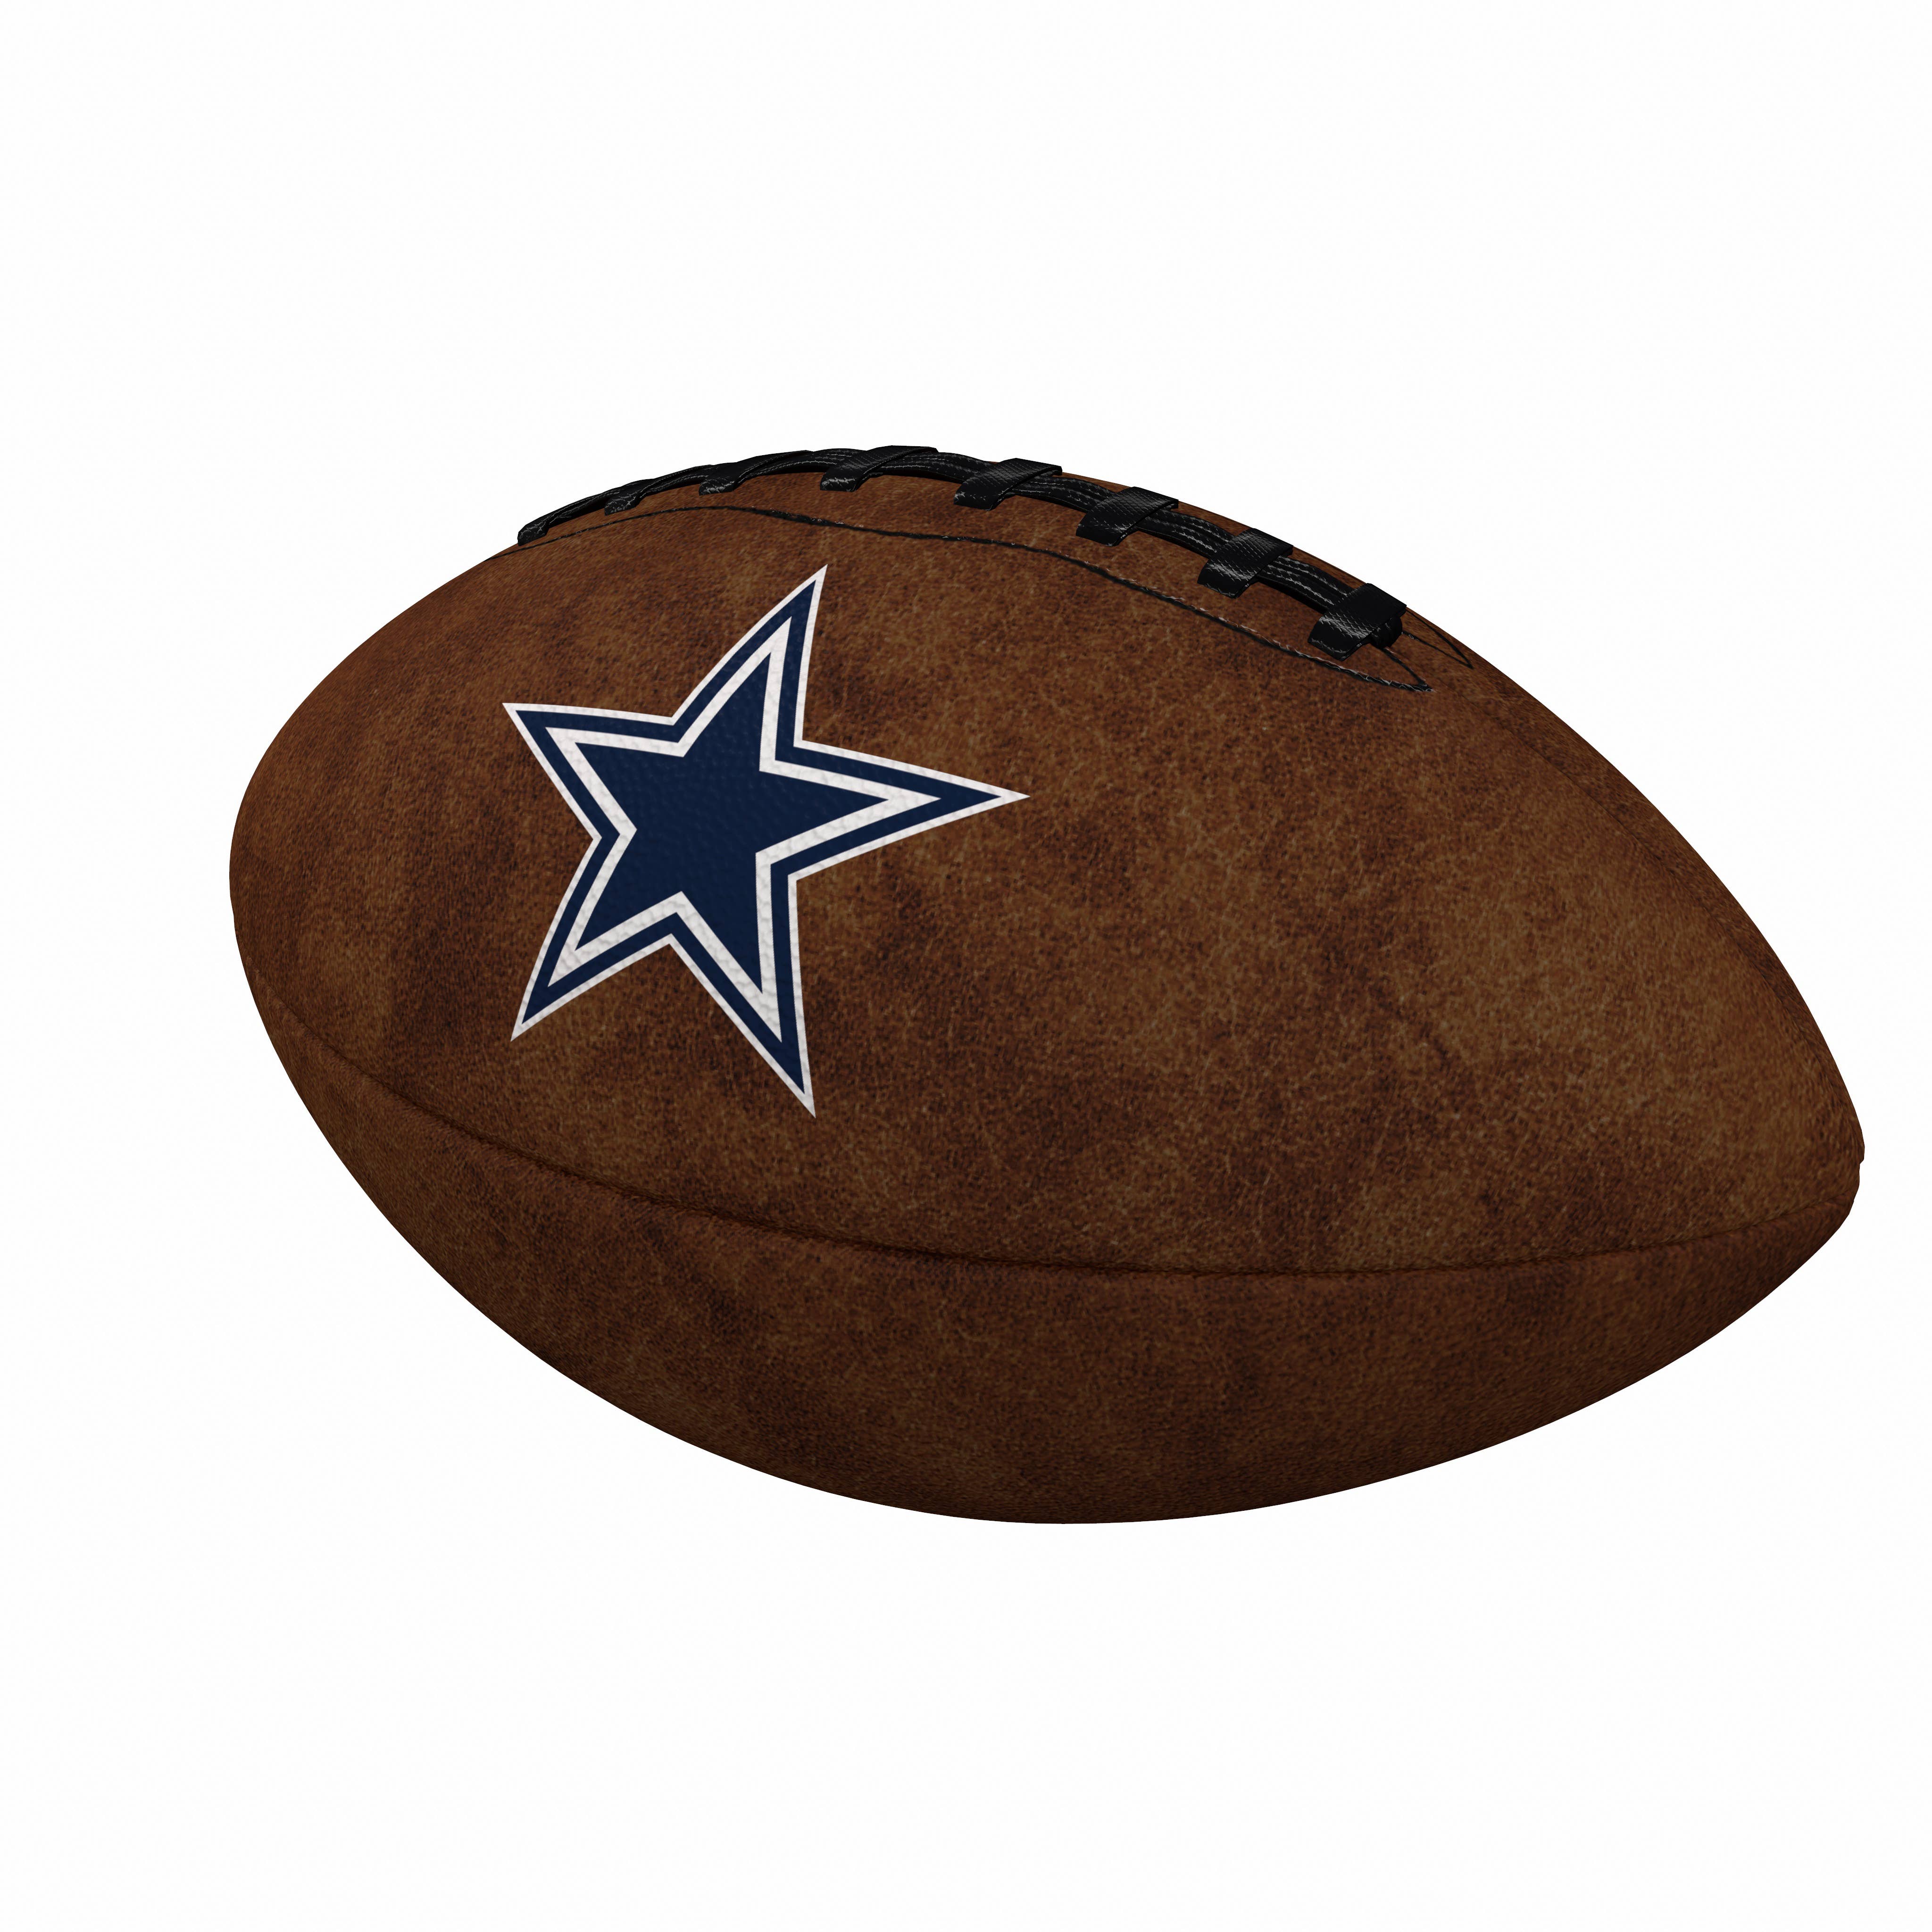 Handmade Leather Koozie - Dallas Cowboys Football